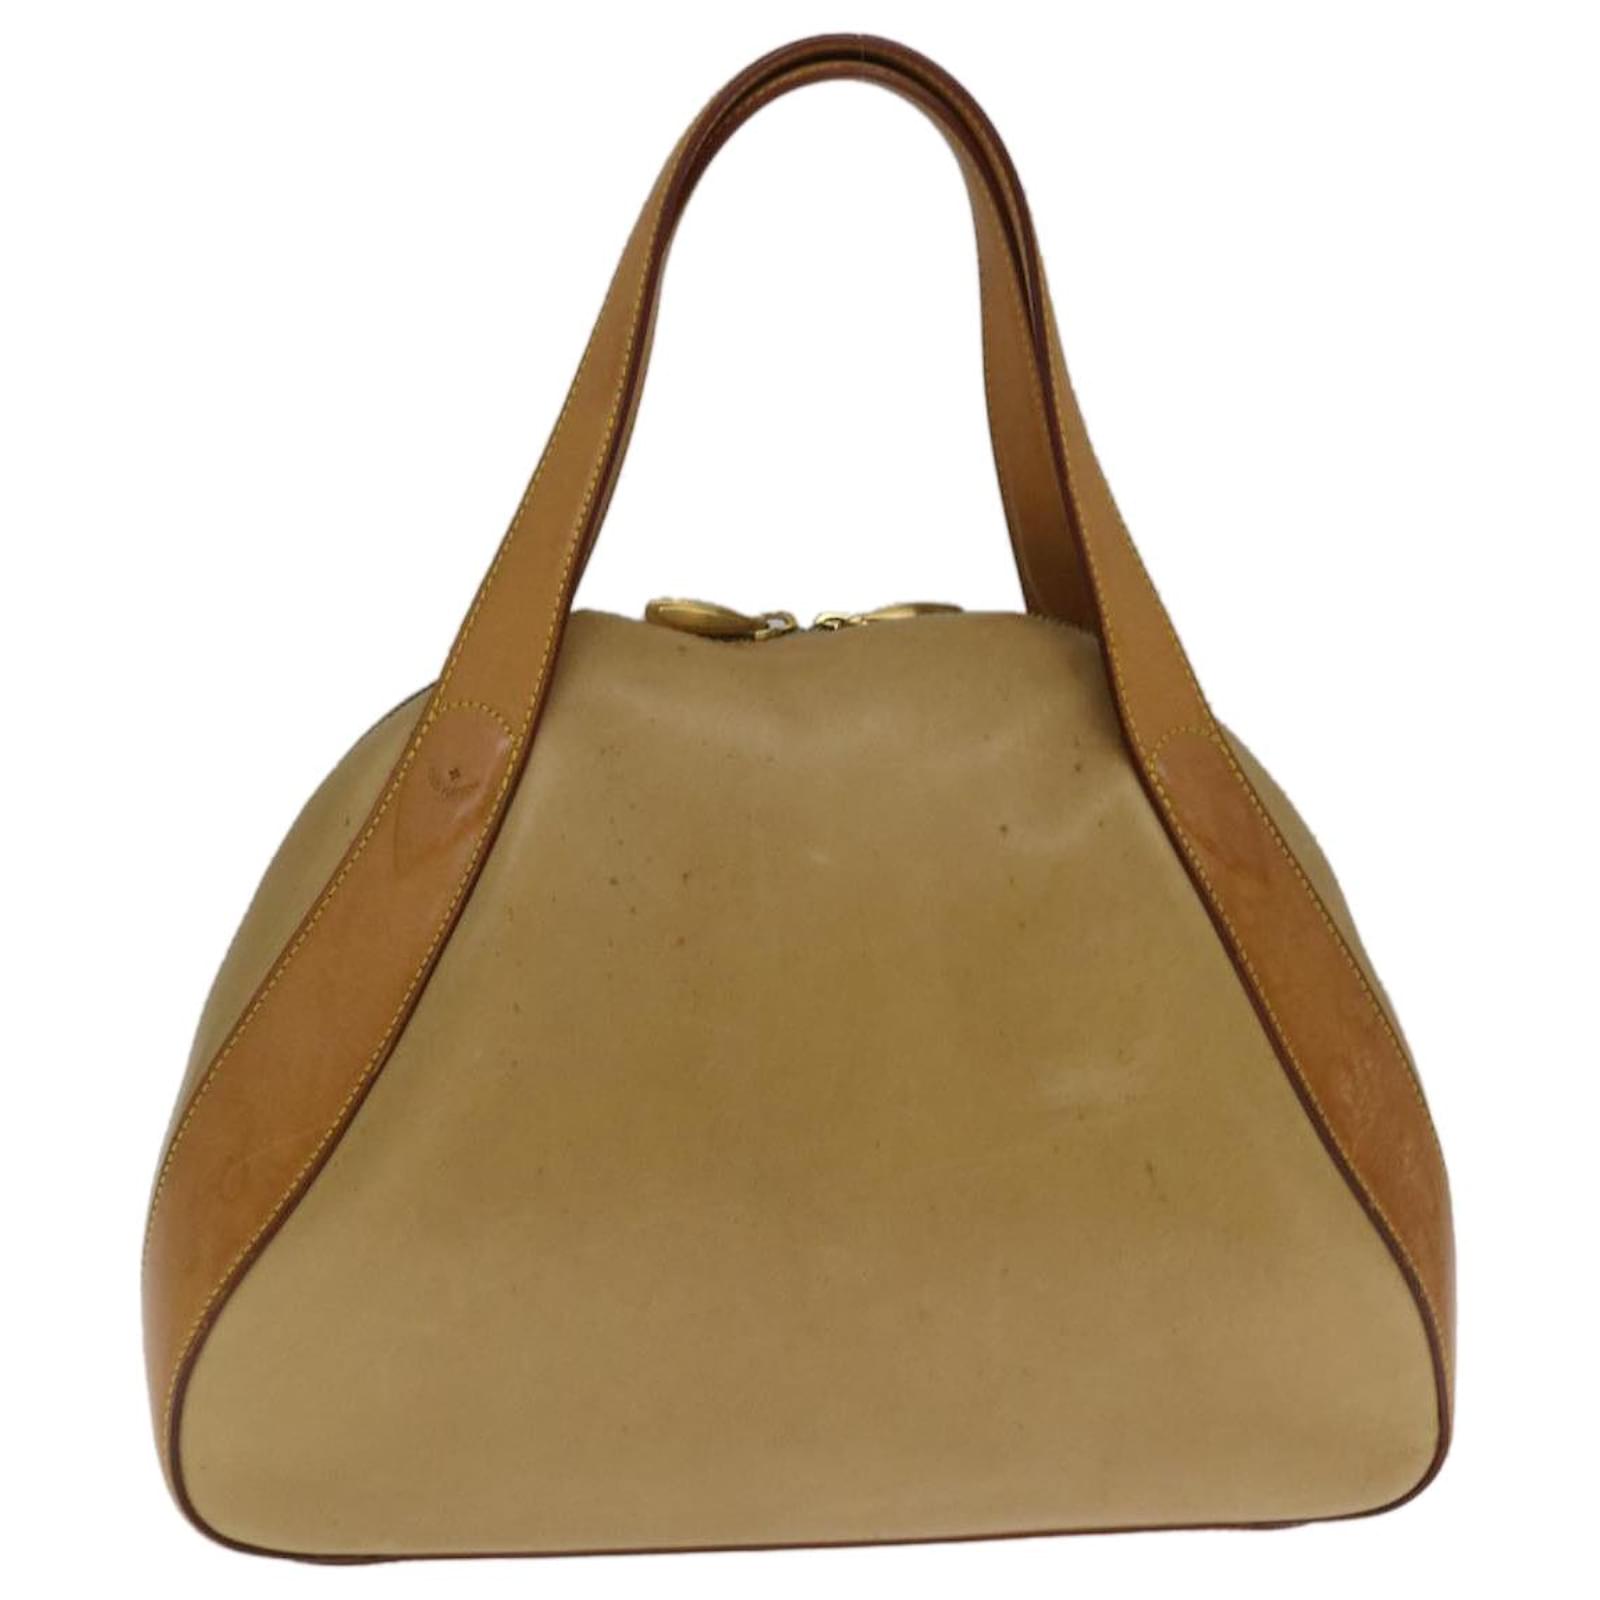 Saint-germain leather handbag Louis Vuitton Beige in Leather